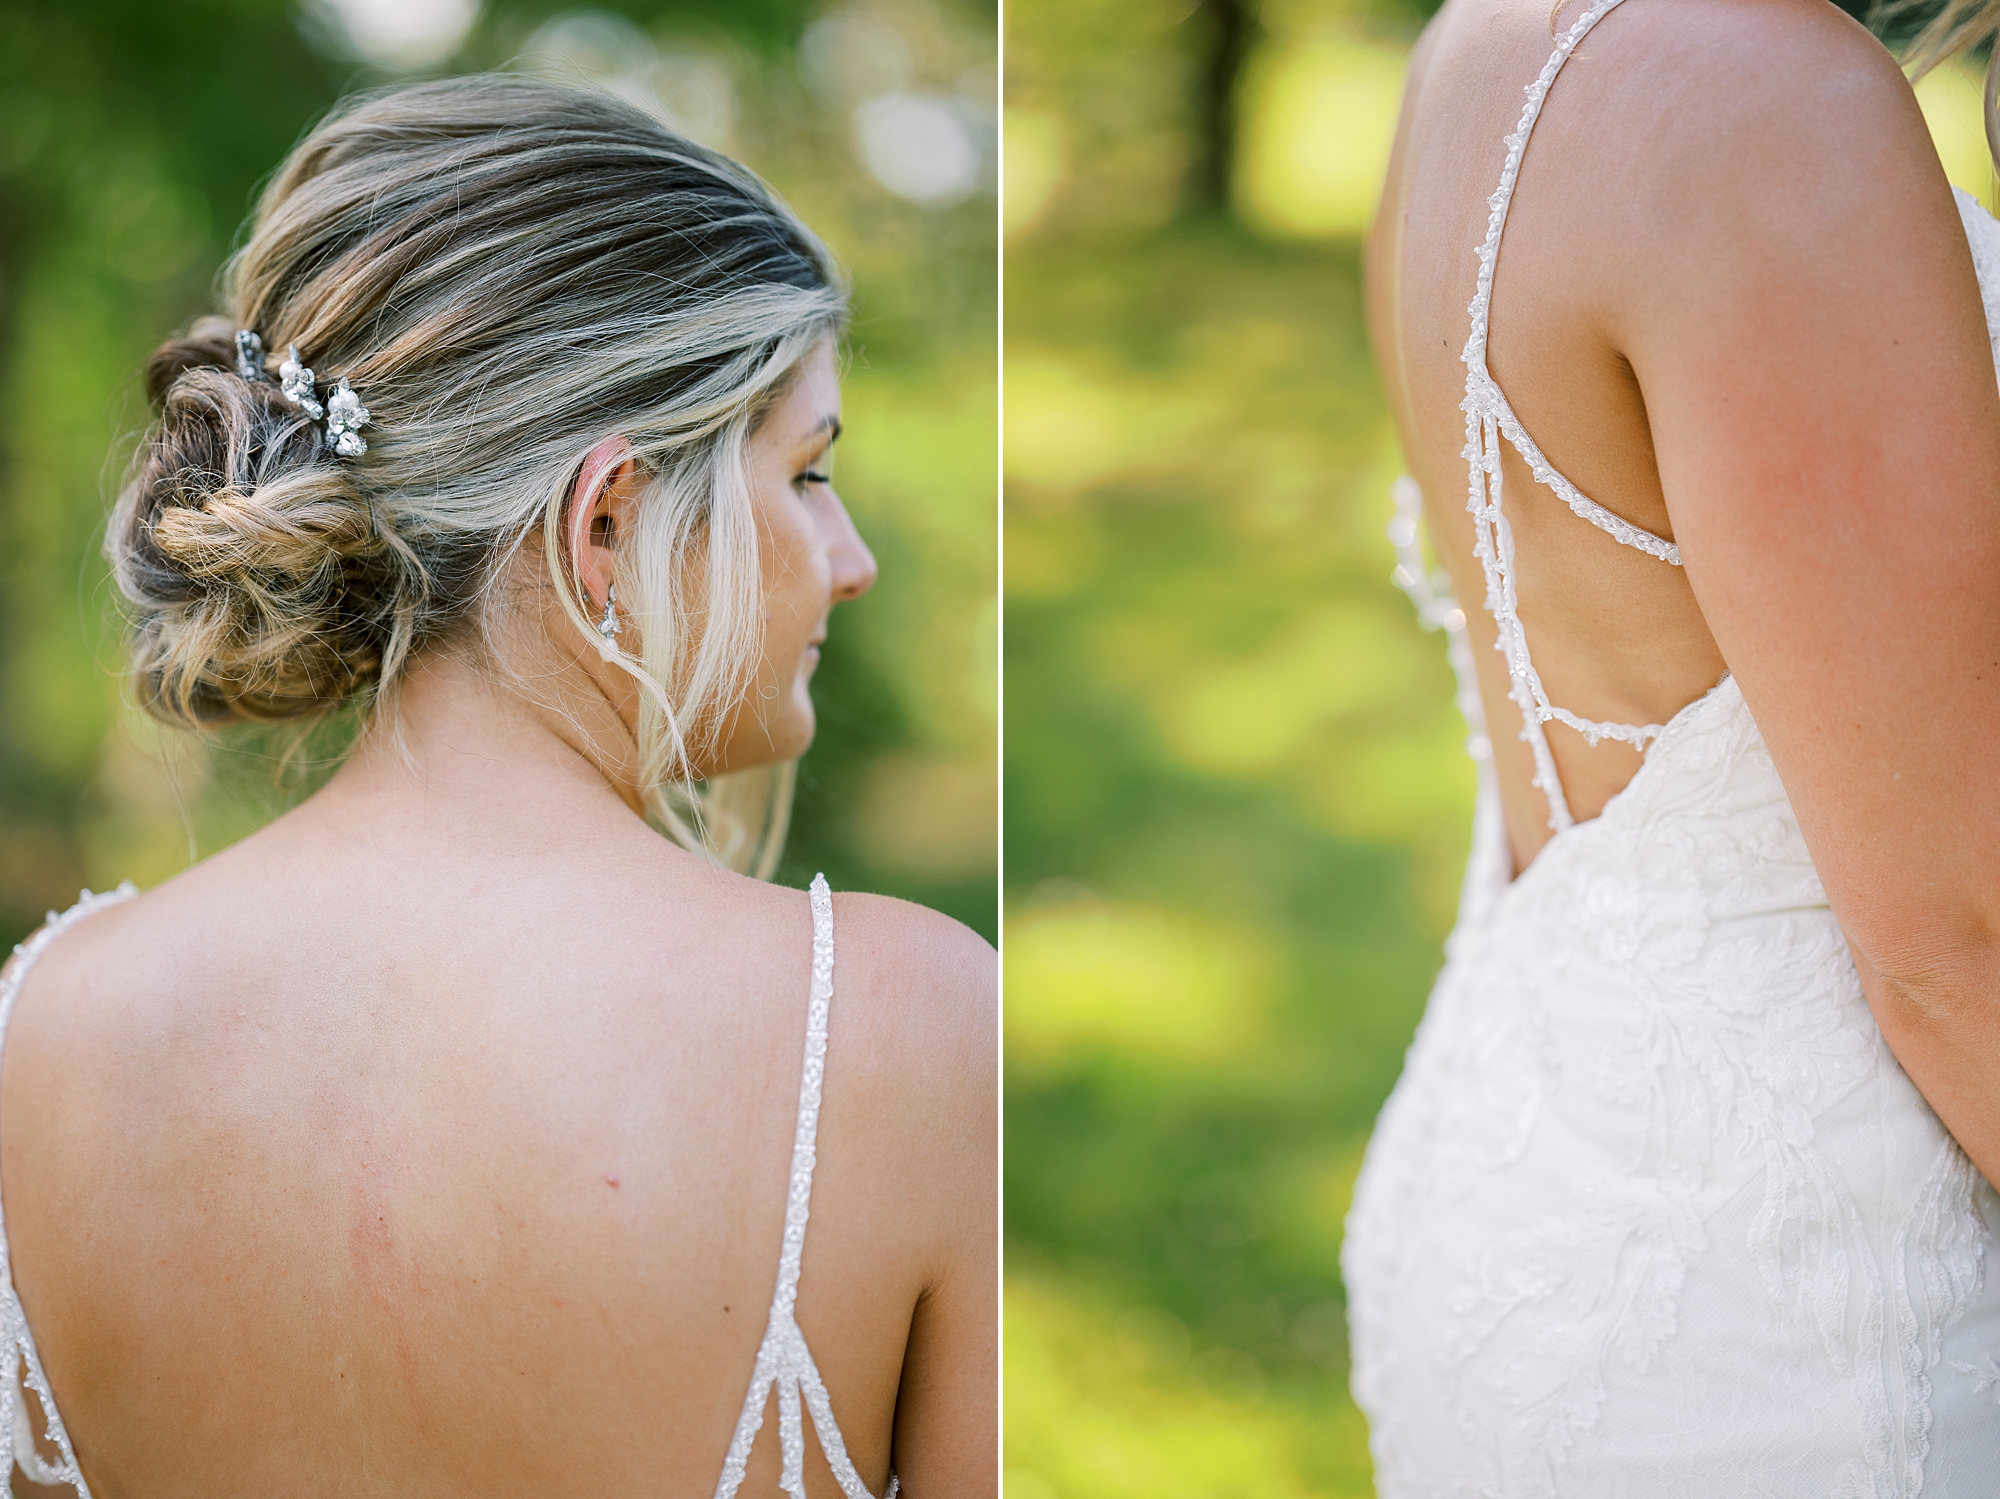 bride shows off back of strapped wedding dress